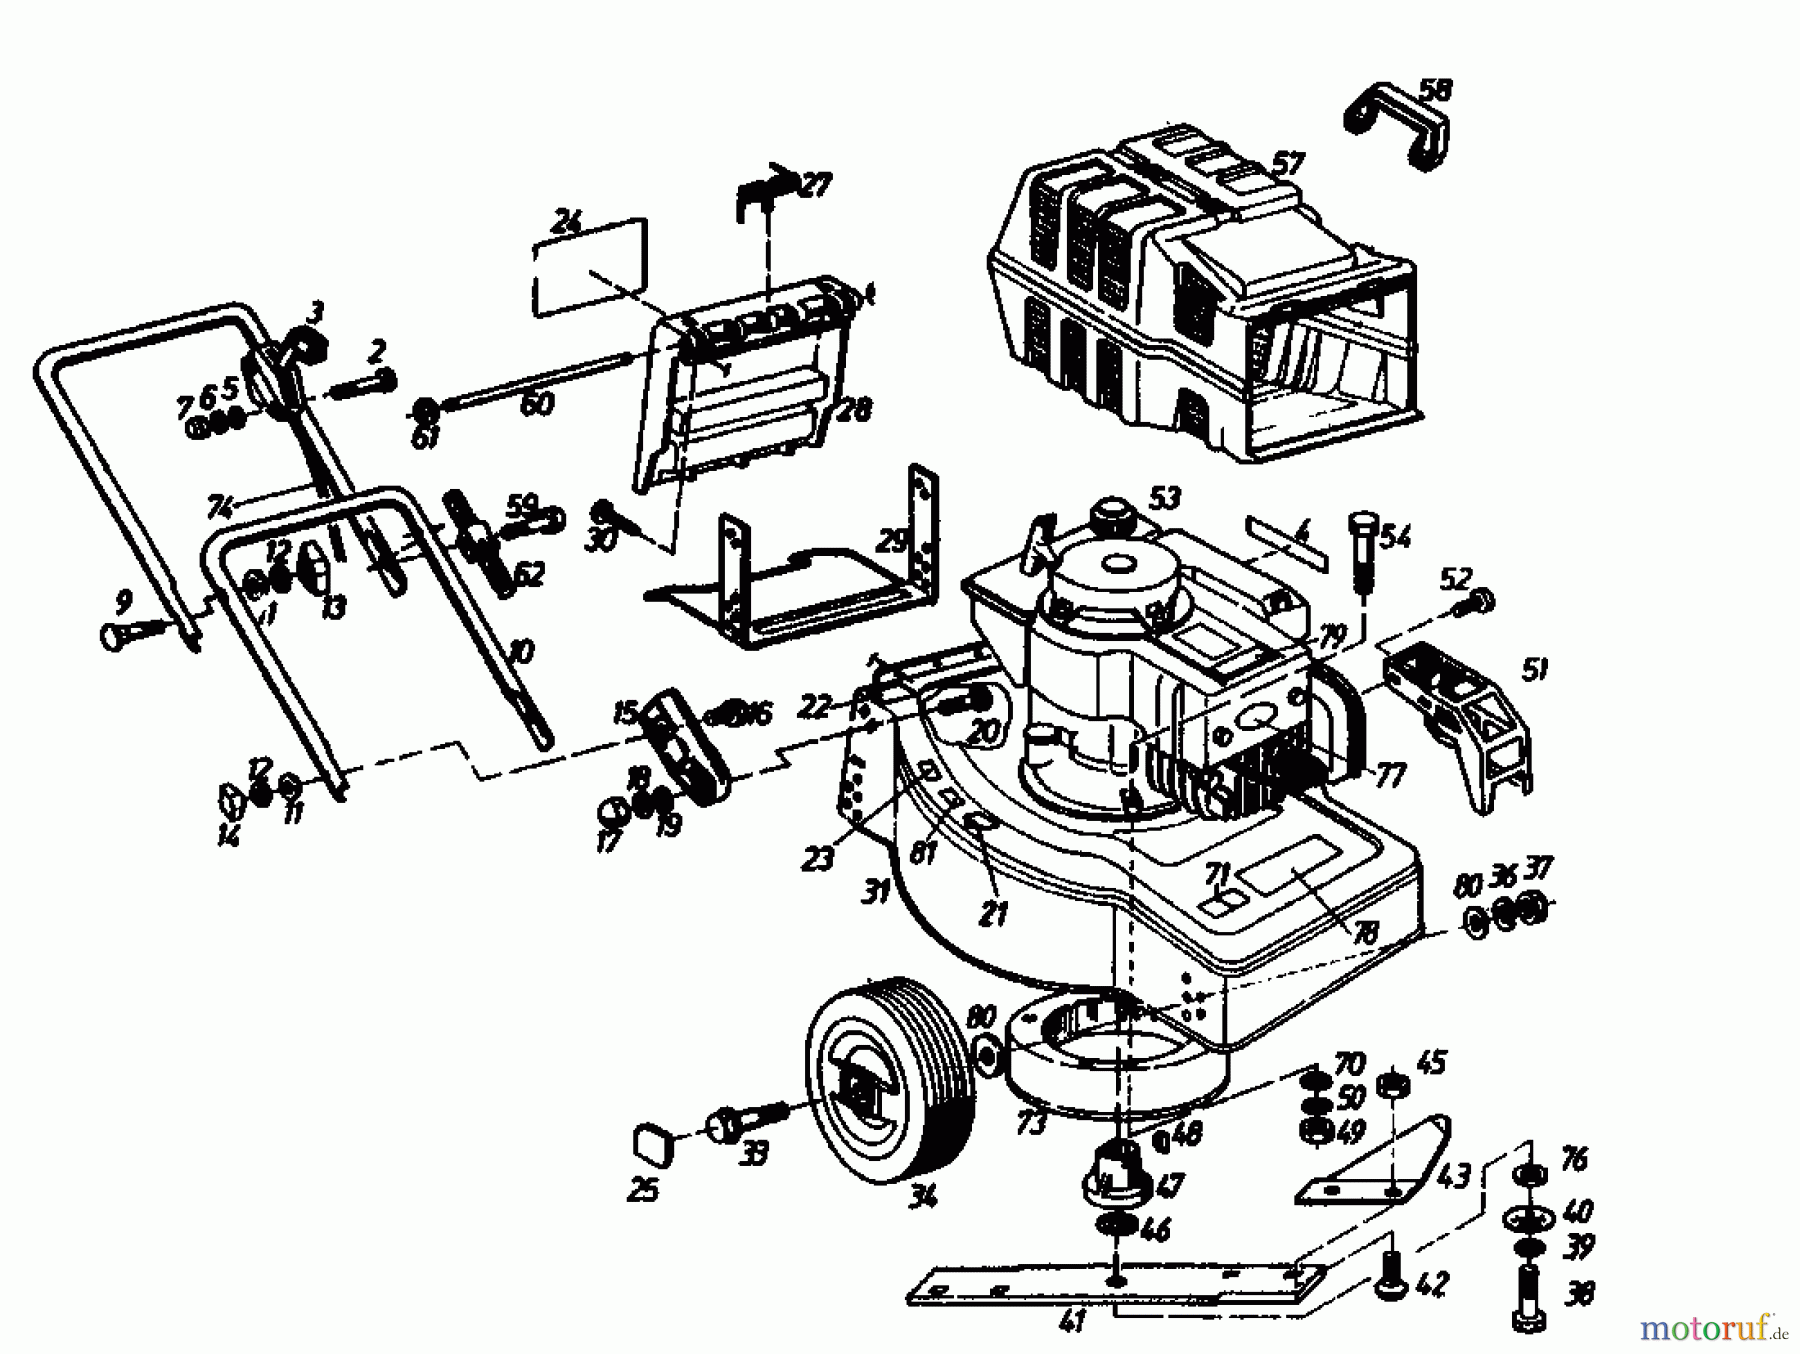  Golf Petrol mower 345 H 4 02842.01  (1991) Basic machine